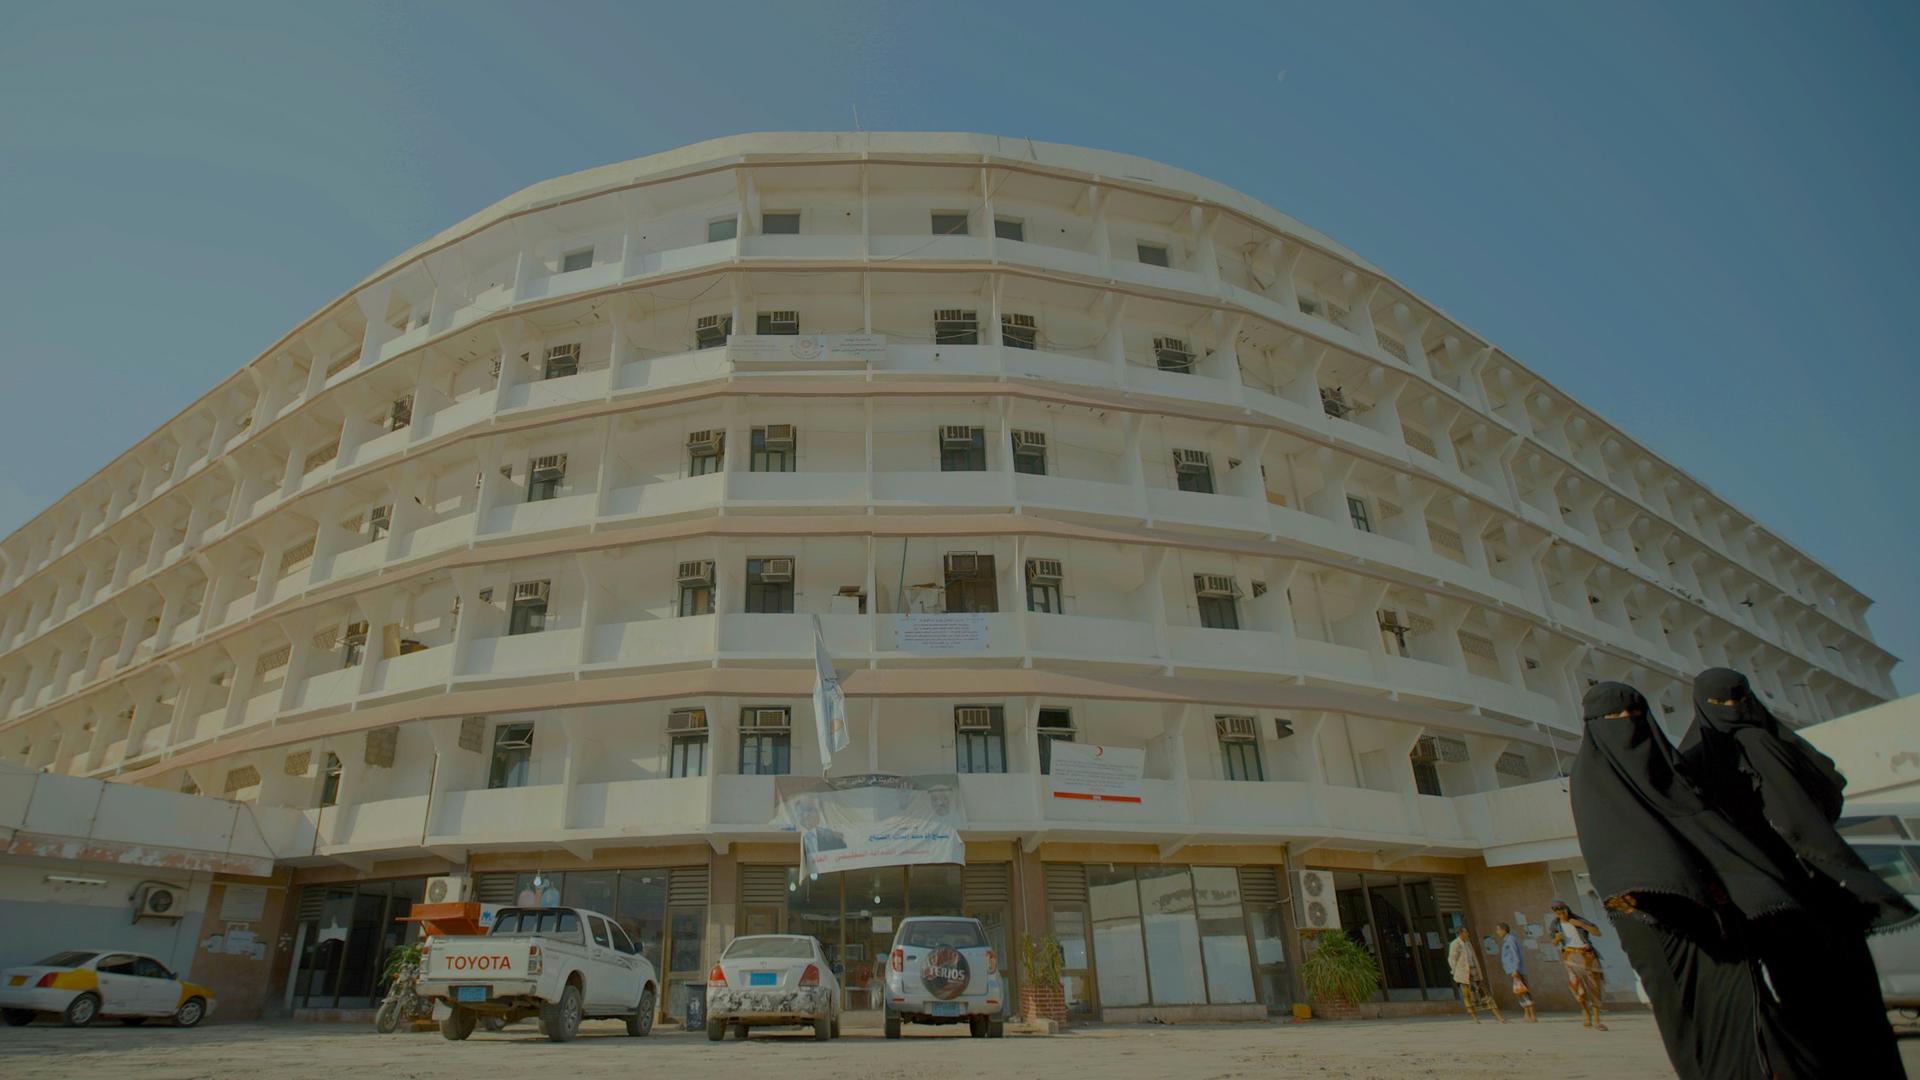 Sadaqa Hospital, as seen from the street